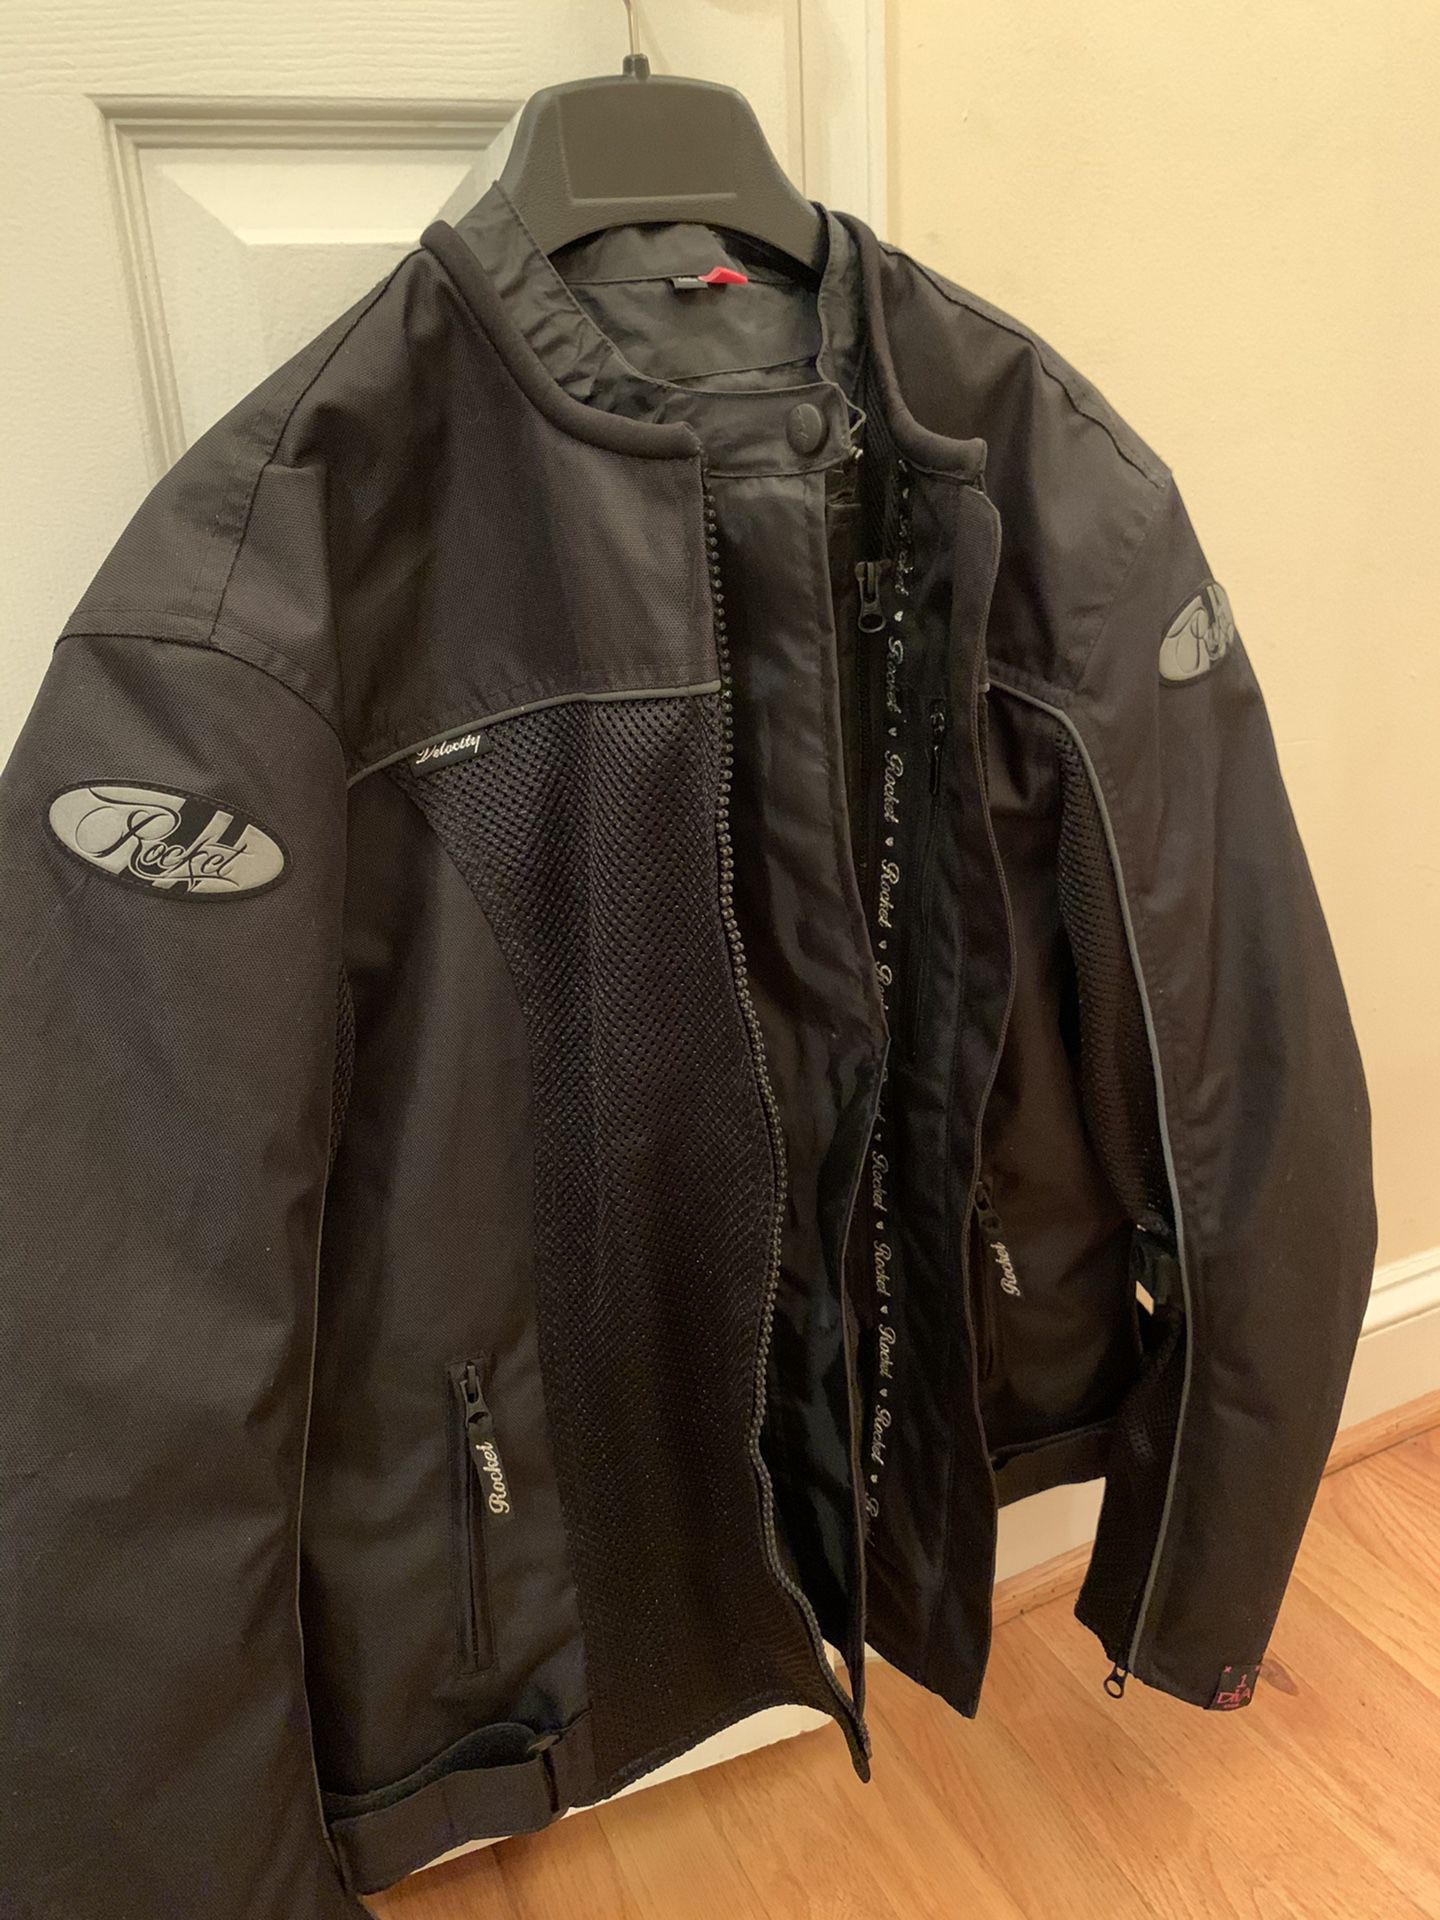 Joe Rocket women’s motorcycle mesh jacket